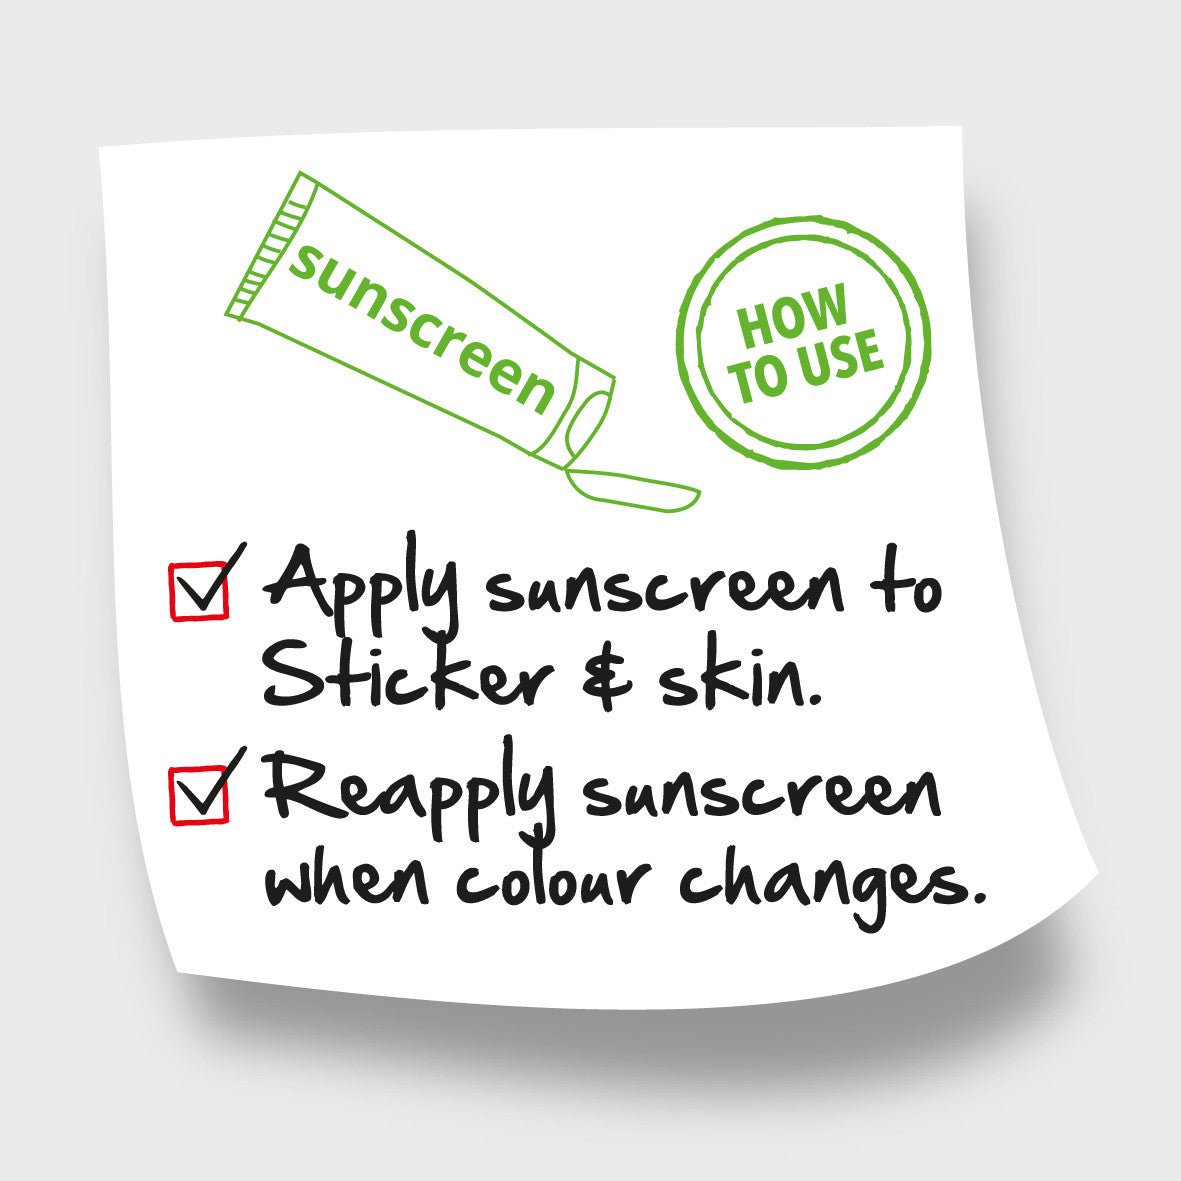 UV Sticker. Monitor UV exposure. Sunscreen Reminder.